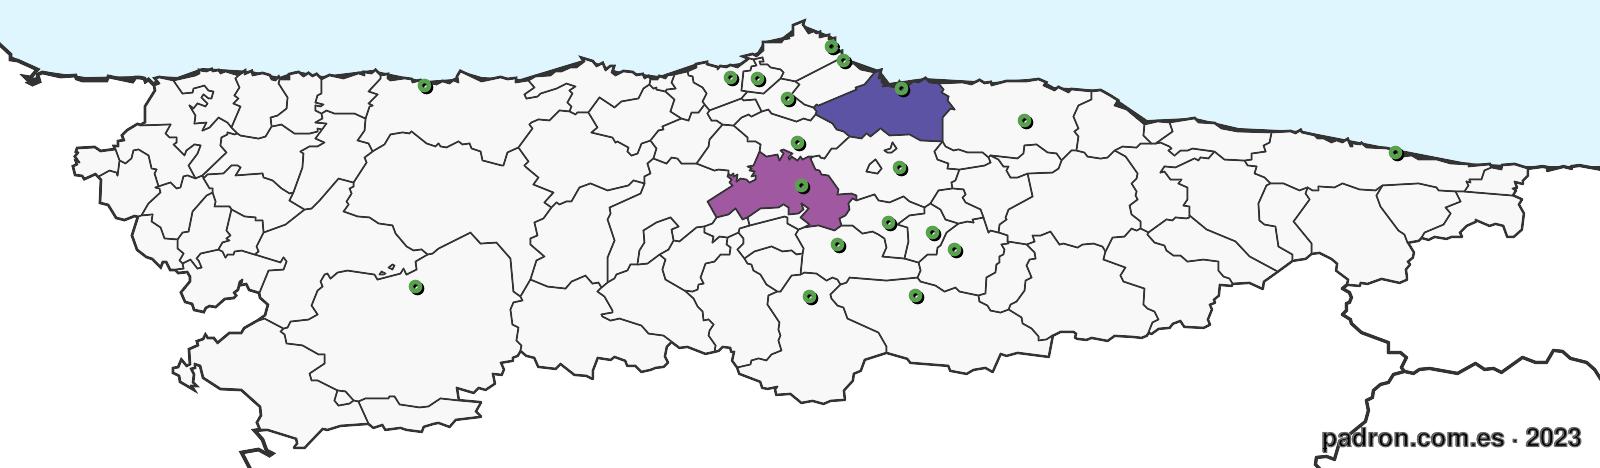 malasios en asturias.